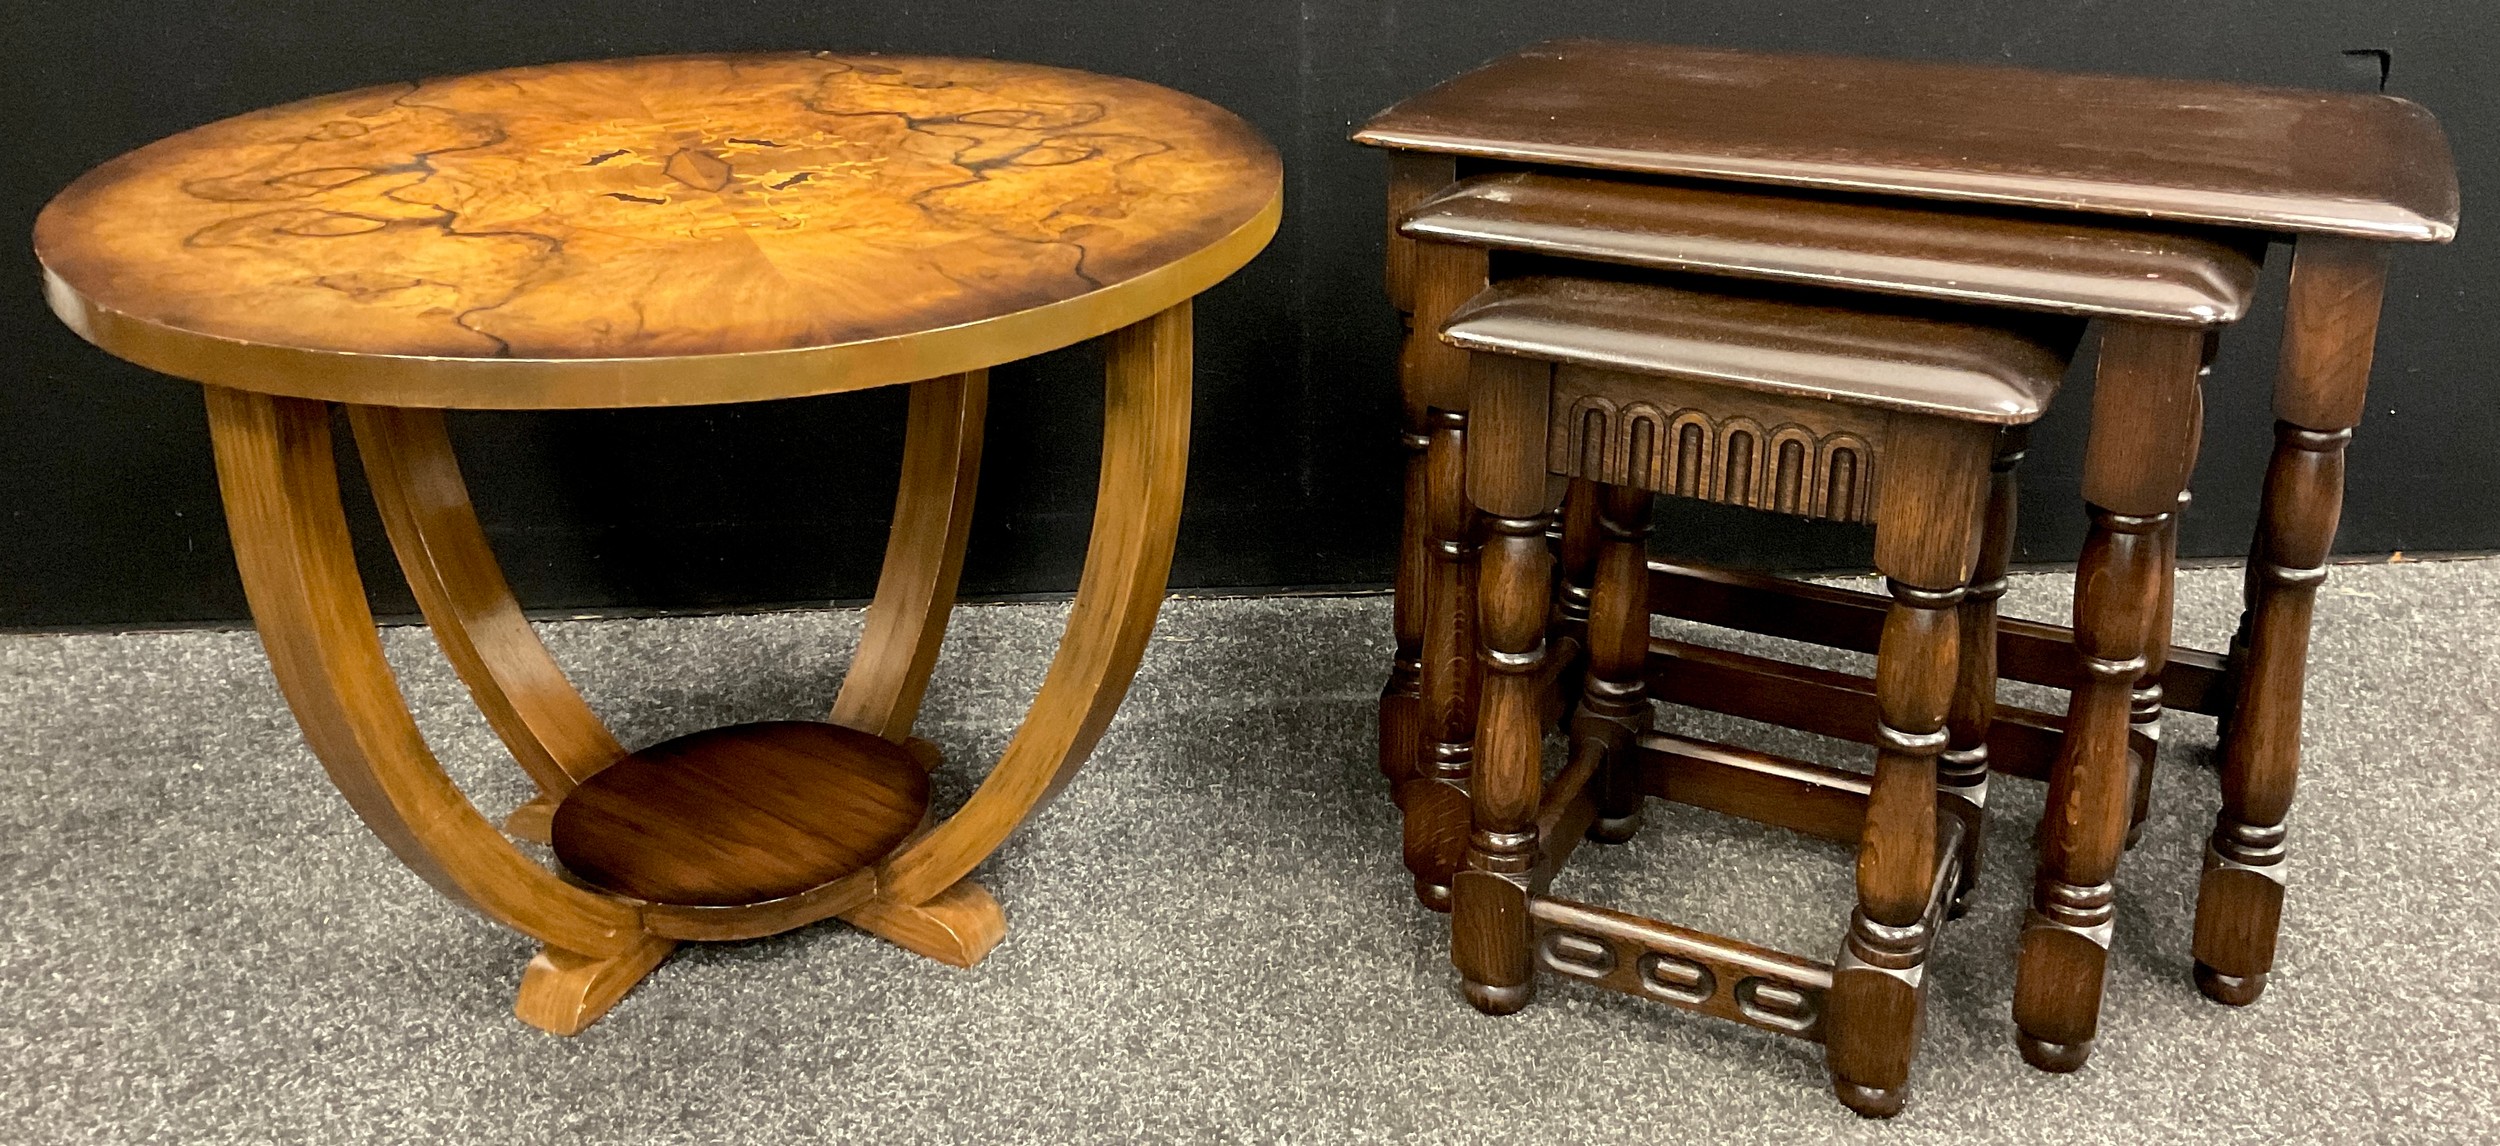 An Art Deco style inlaid walnut occasional table, 46cm high x 64.5cm diameter; a Priory oak nest